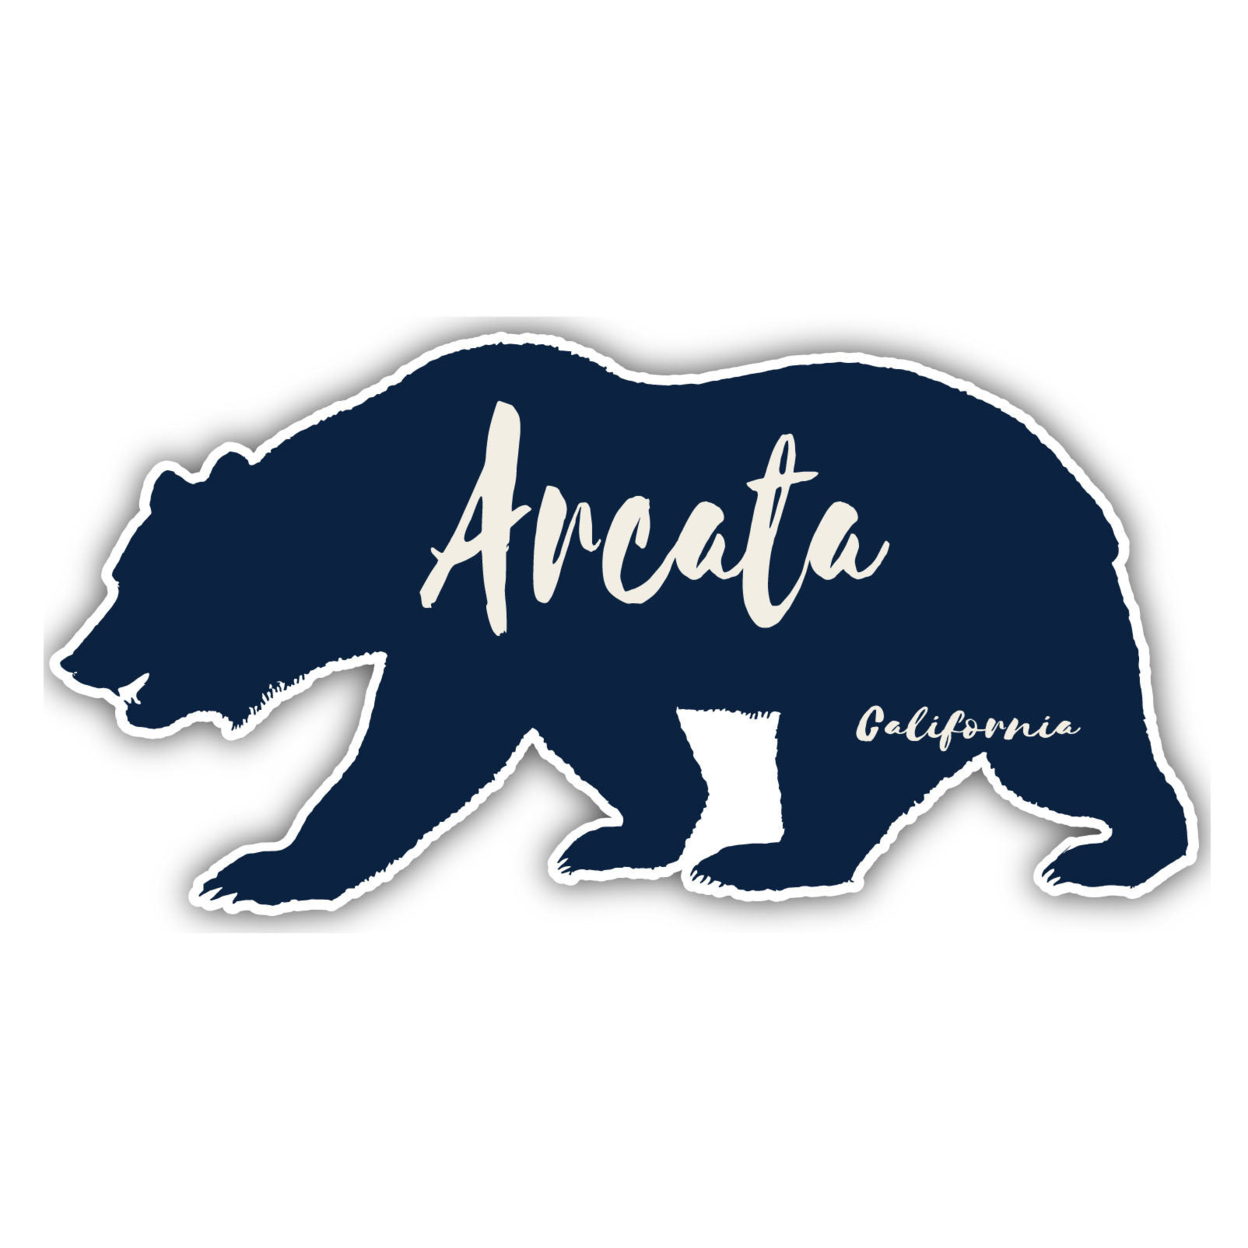 Arcata California Souvenir Decorative Stickers (Choose Theme And Size) - 4-Pack, 10-Inch, Bear